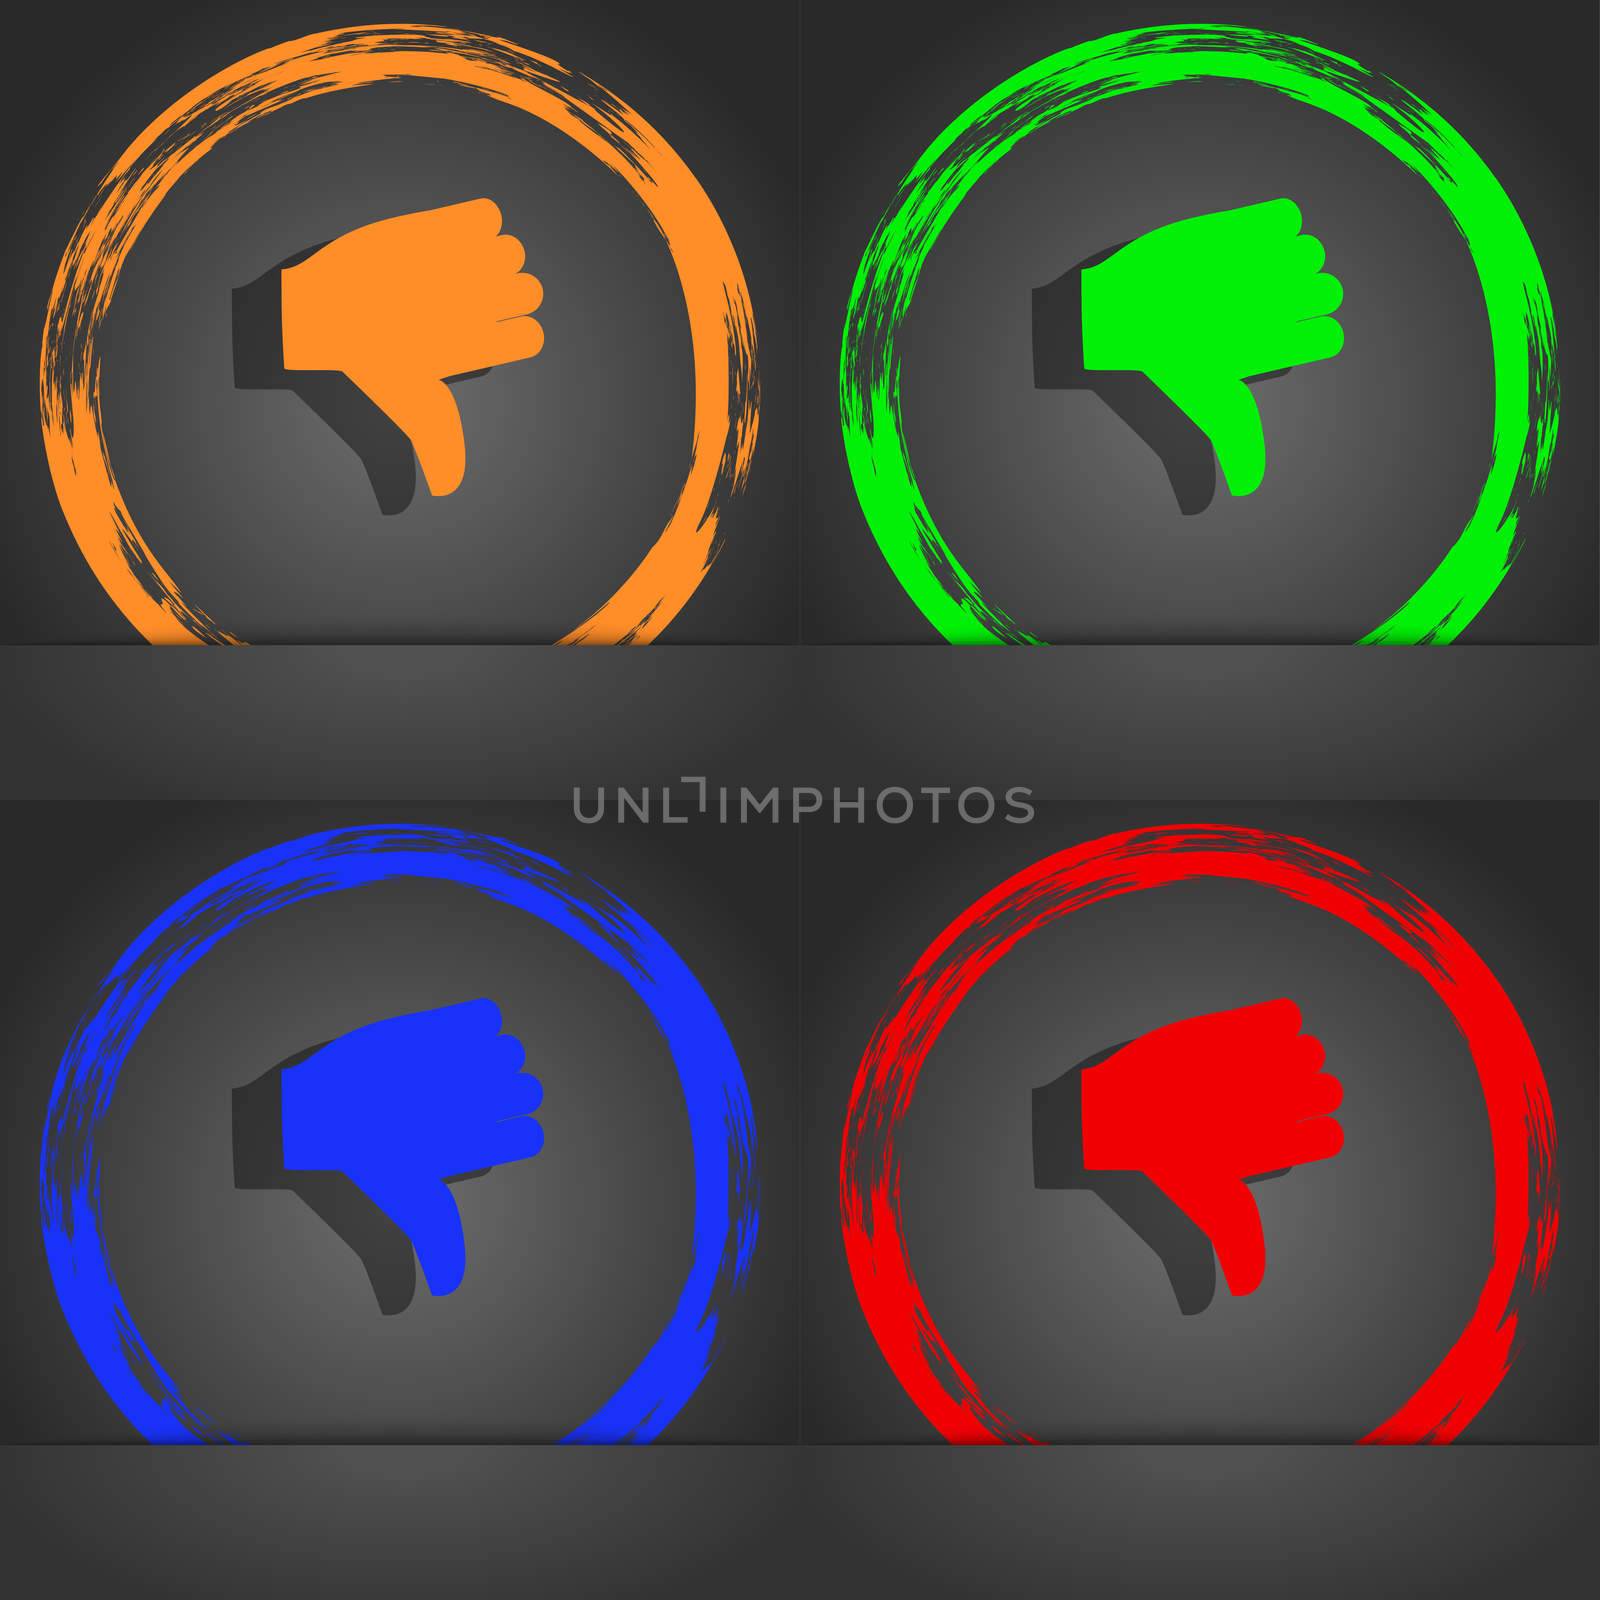 Dislike, Thumb down icon symbol. Fashionable modern style. In the orange, green, blue, green design. illustration